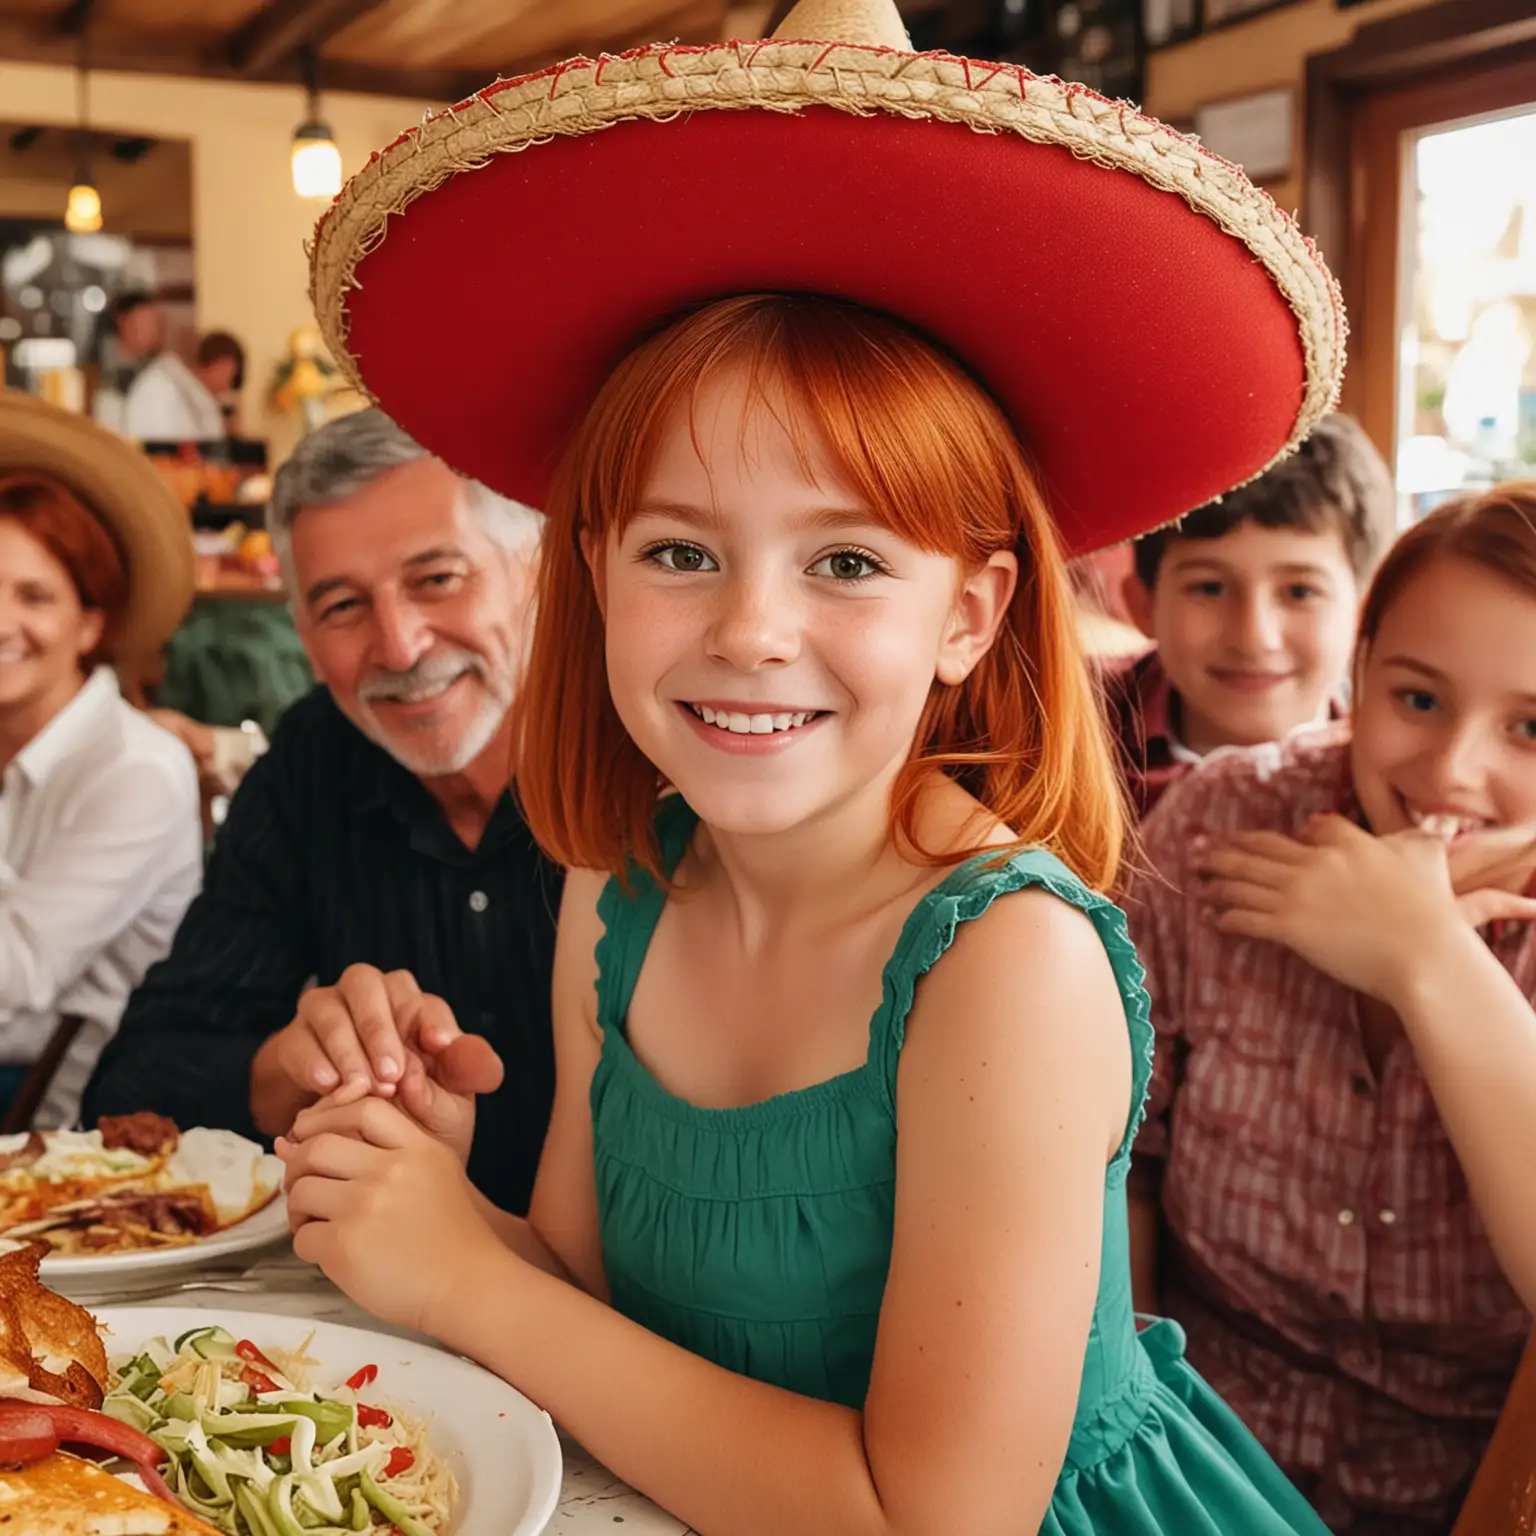 Spanish Restaurant Family Gathering with Redheaded Girl in Sombrero